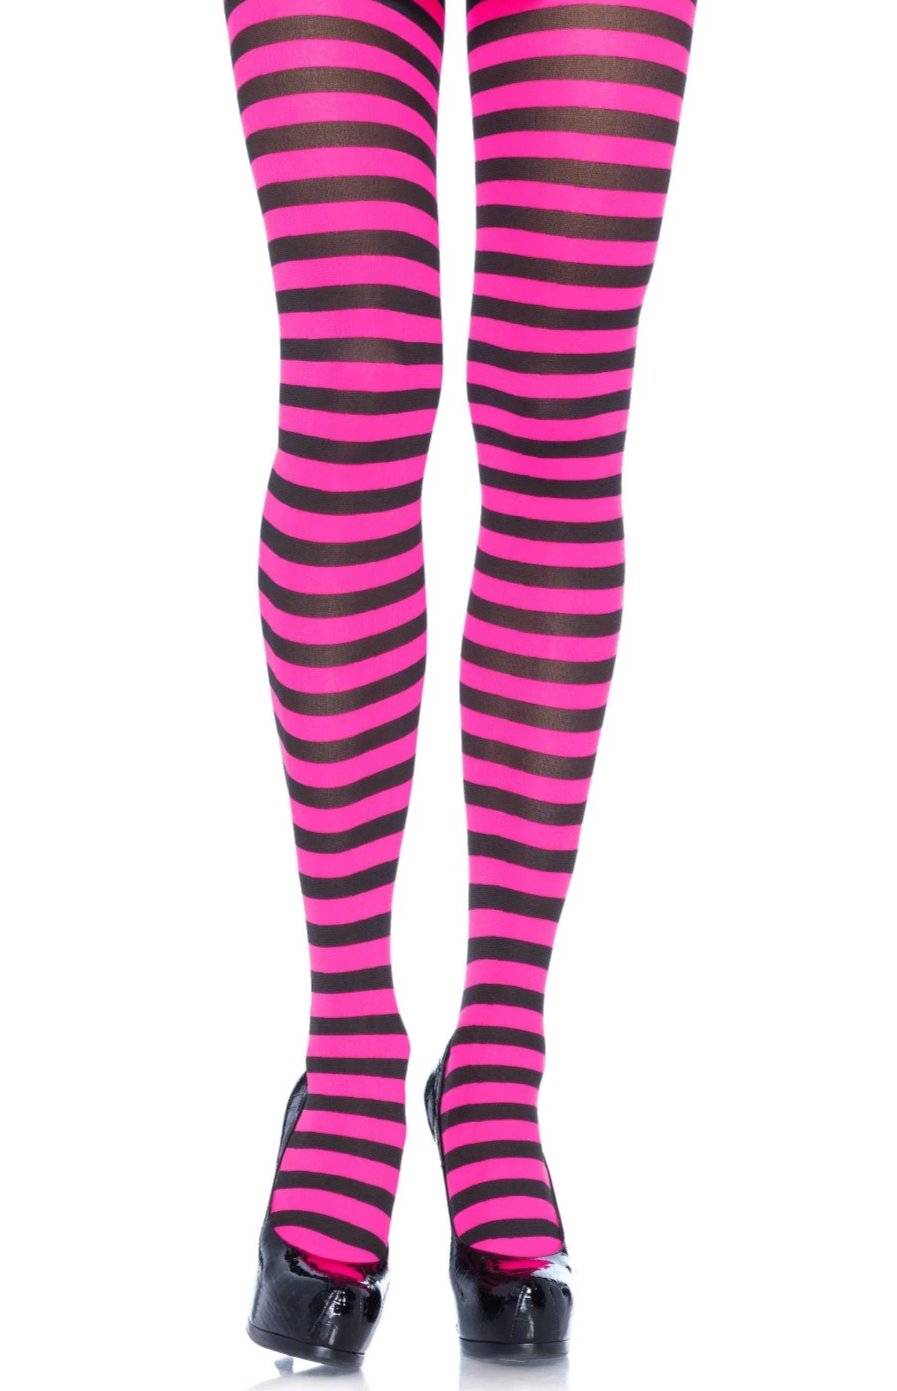 Leg Avenue 7100 Nylon Stripe Tights - neon pink and black horizontal striped pantyhose